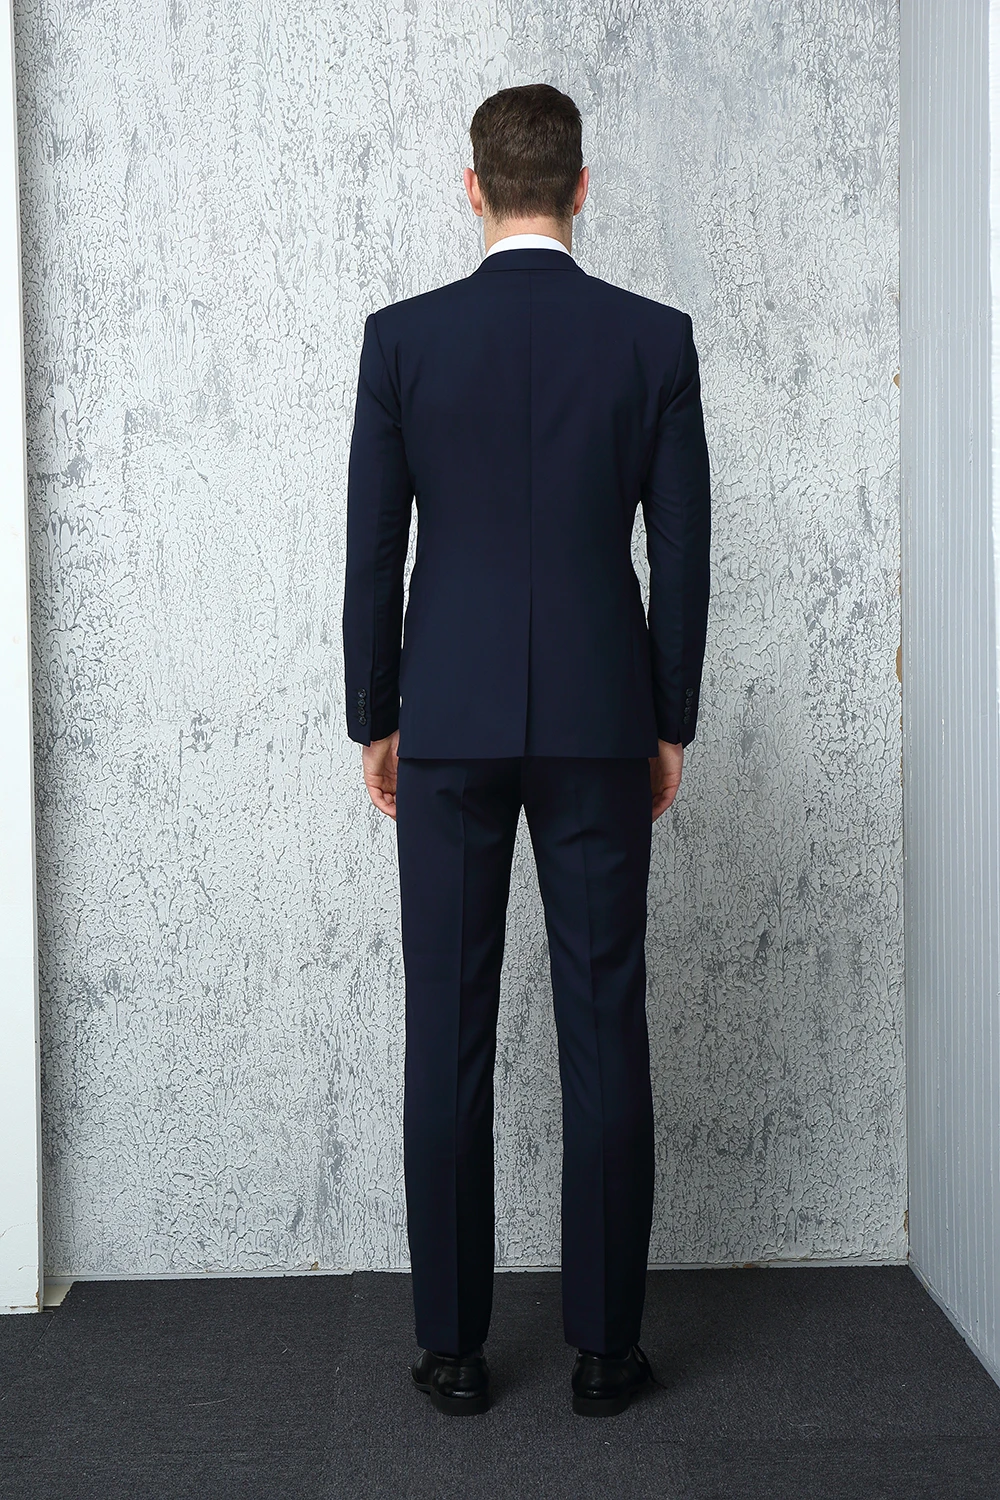 Wrwcm на заказ мужской костюм высокого качества на заказ два цвета поддержка предприятия изготовление на заказ джентльменский стиль на заказ